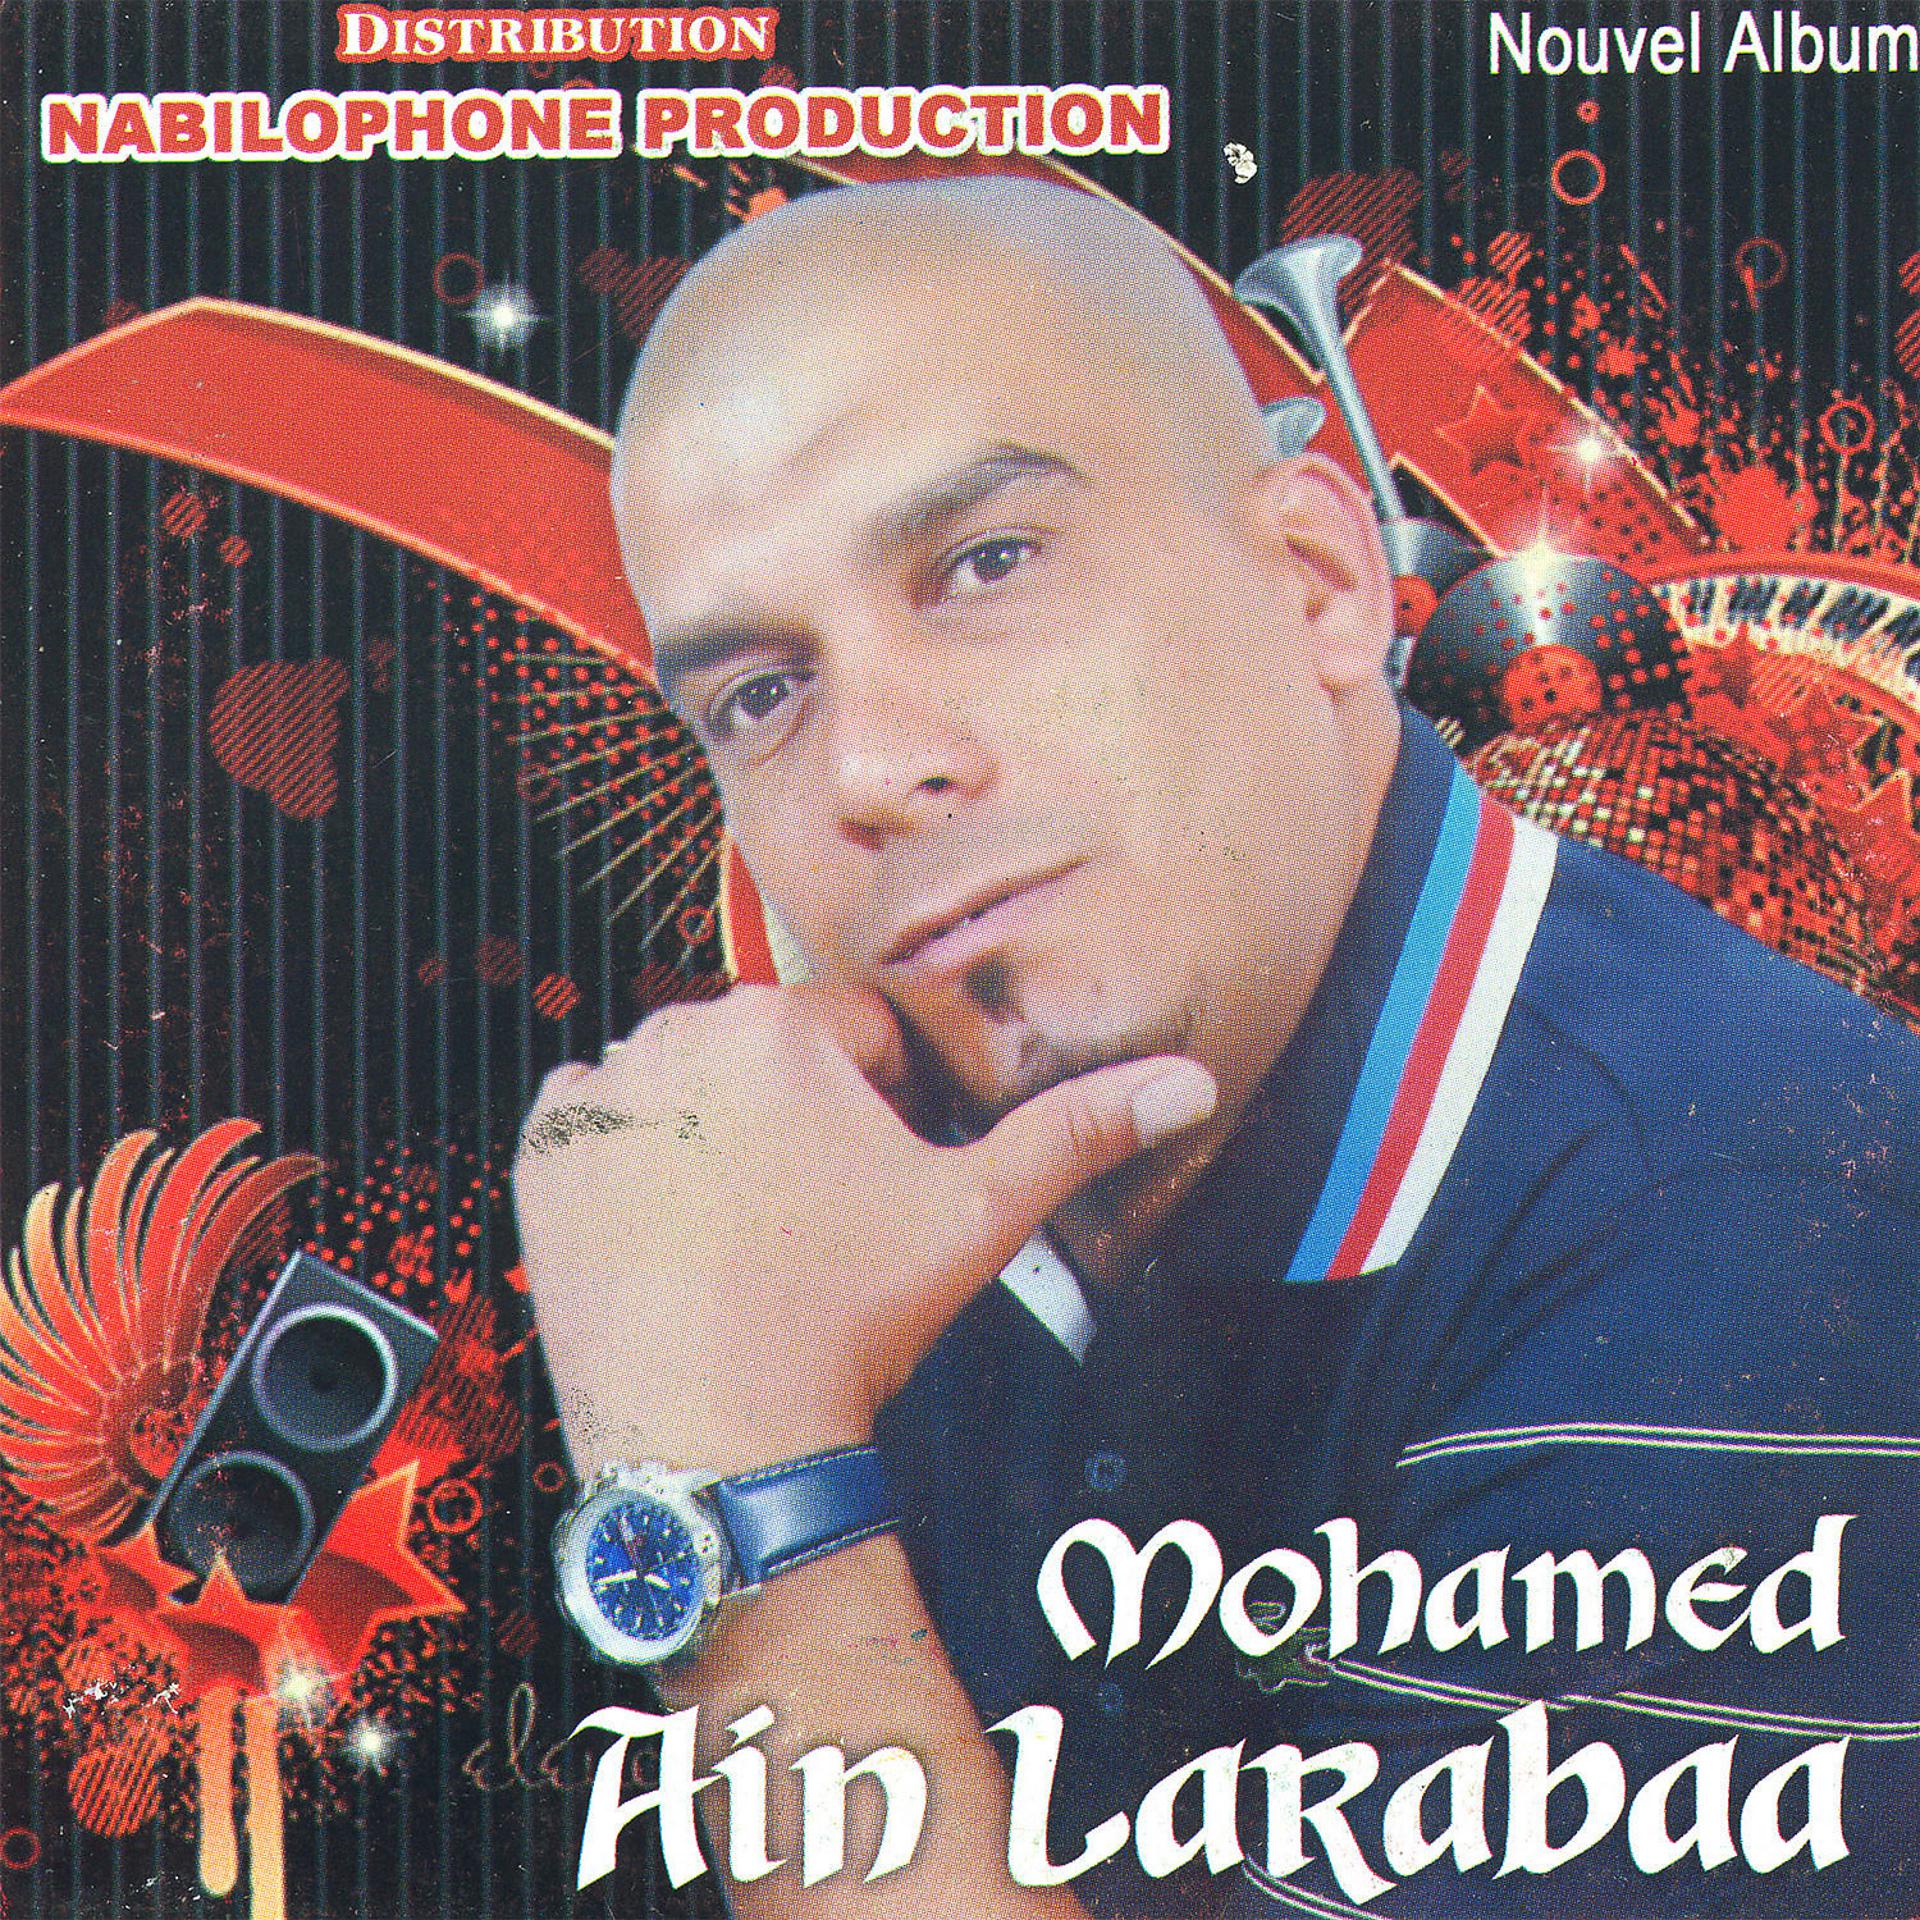 Постер альбома Mohamed Ain Larabaa